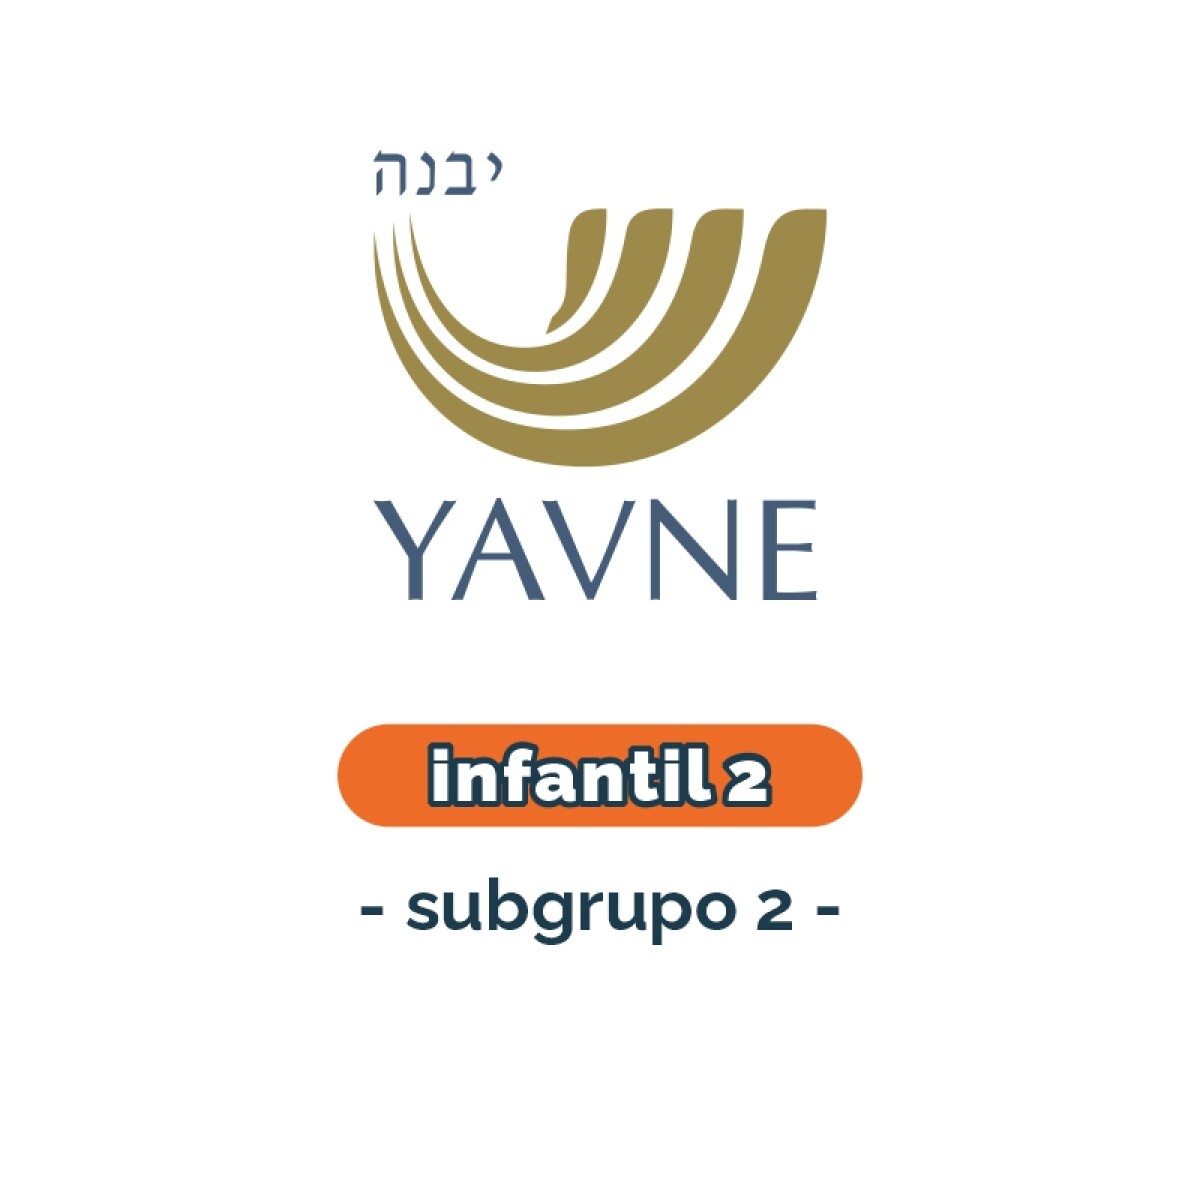 Lista de materiales - Infantil 2 subgrupo 2 YAVNE 